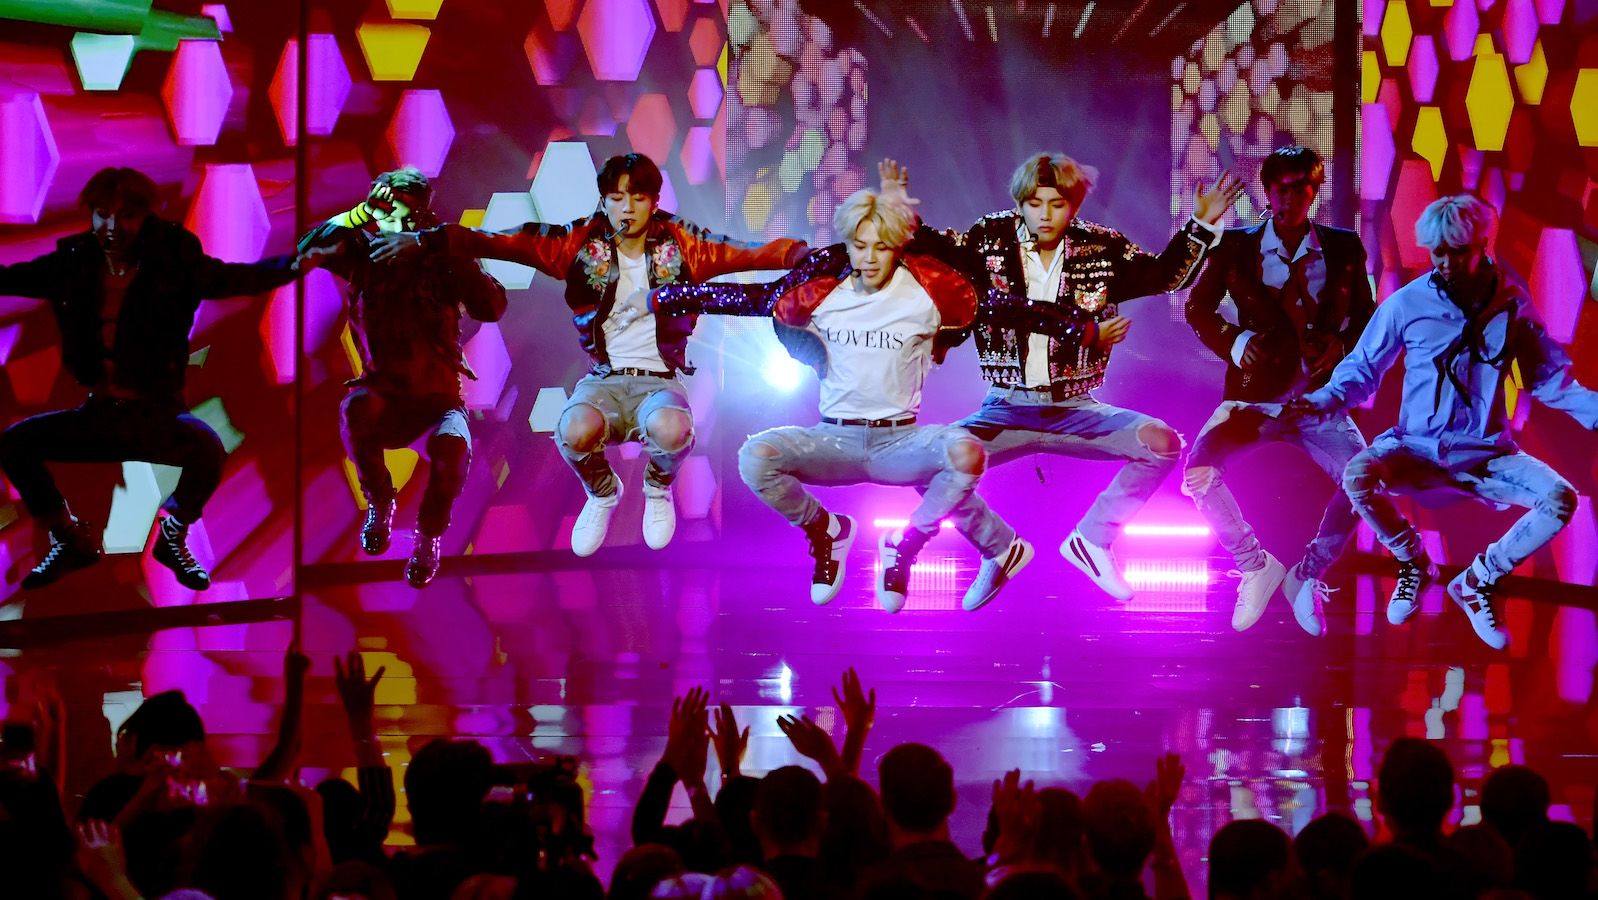 How BTS Are Breaking K-Pop's Biggest Taboos